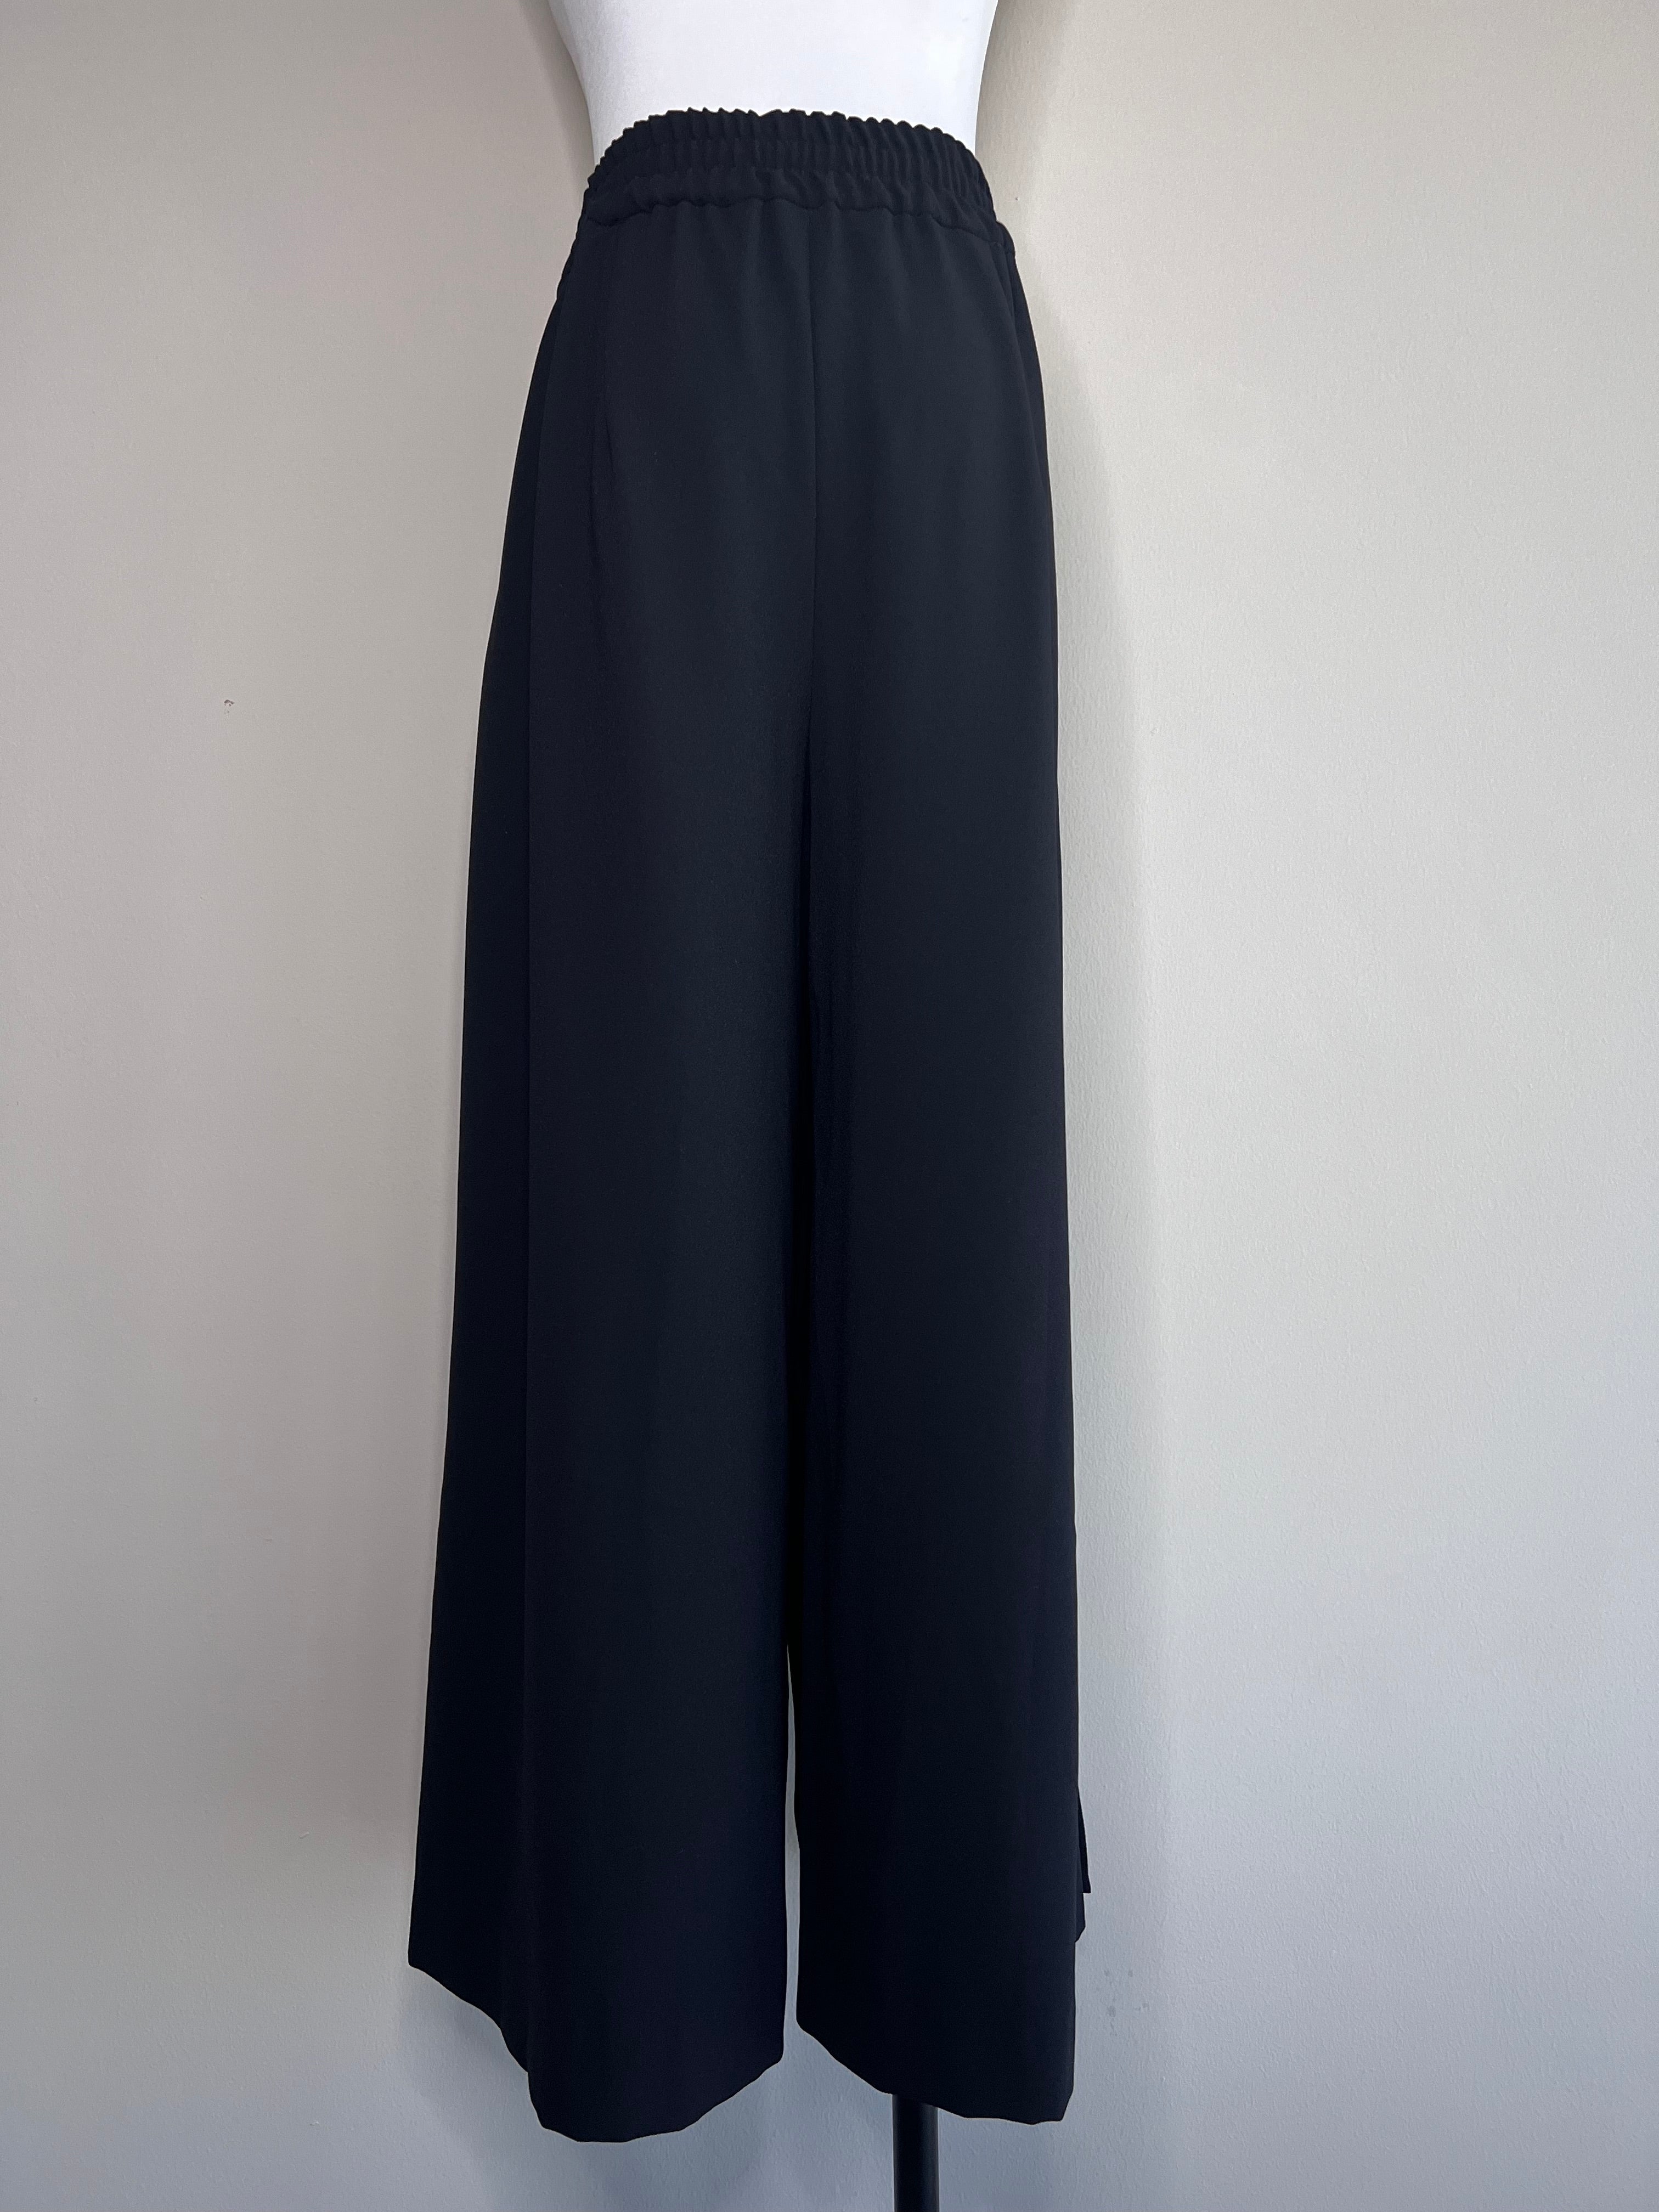 Black chic two-lined wide leg dress pants - ZARA